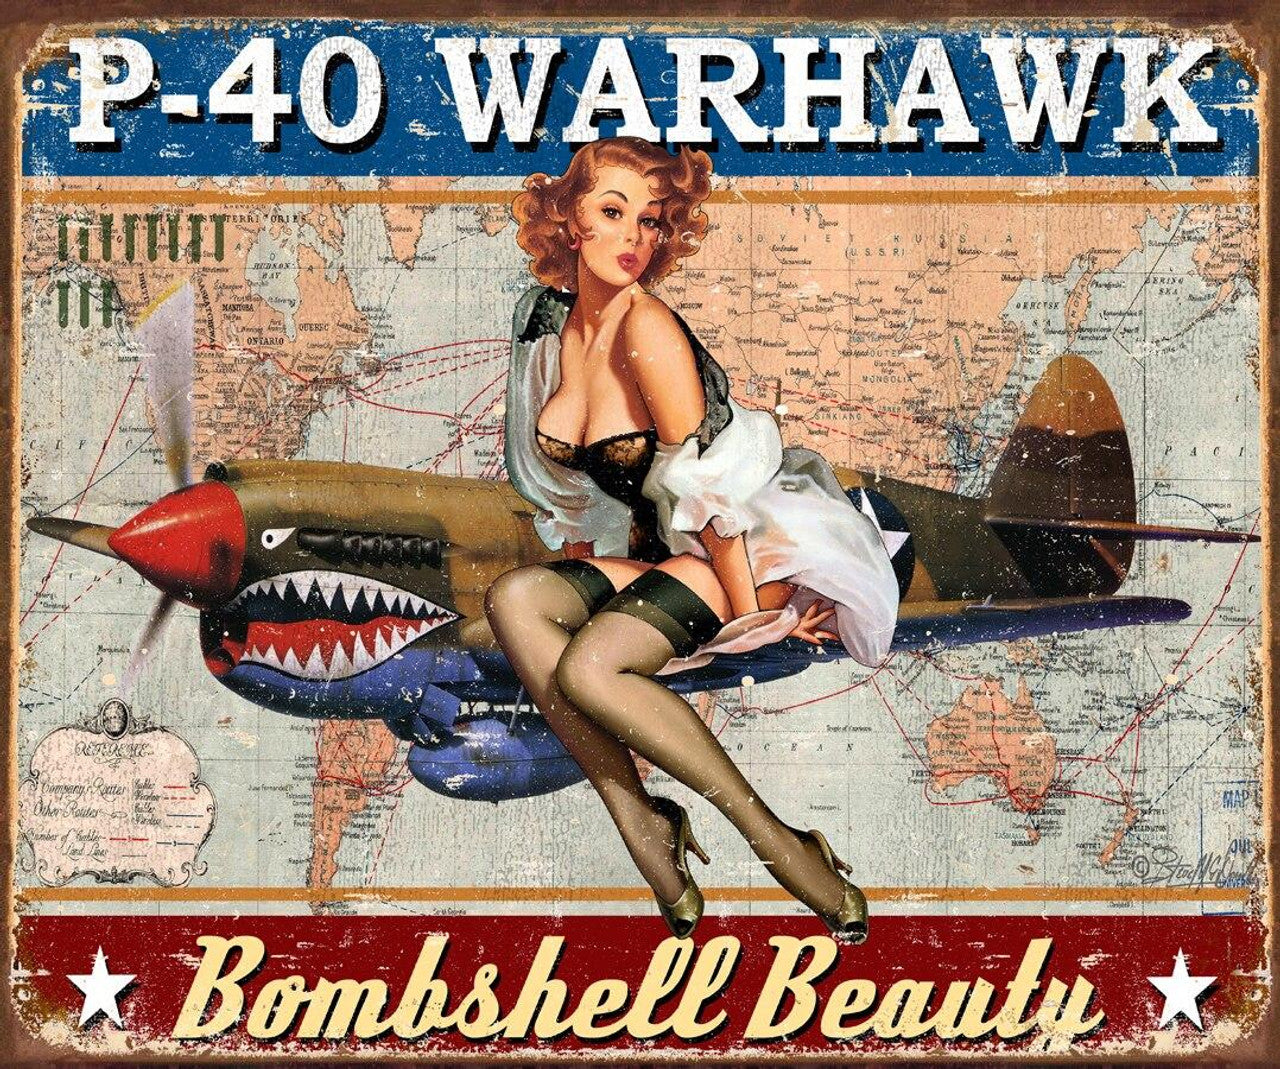 Warhawk 16' x 12.5" Metal Tin Sign - 2460